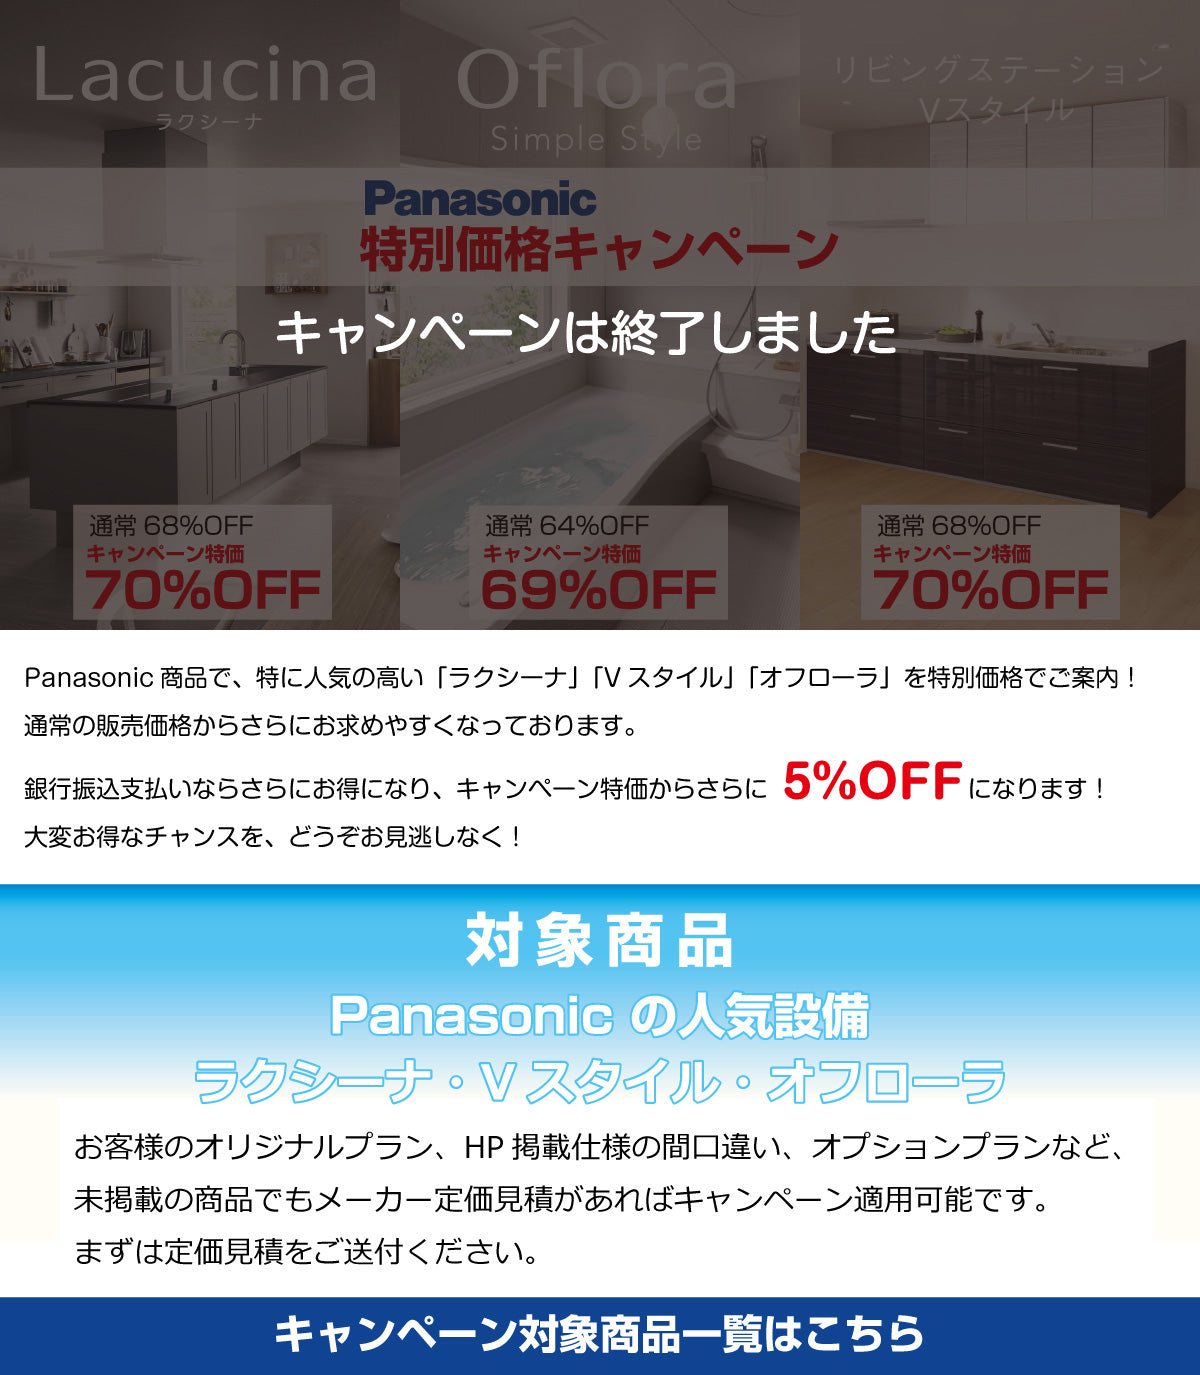 Panasonic 特別価格キャンペーン